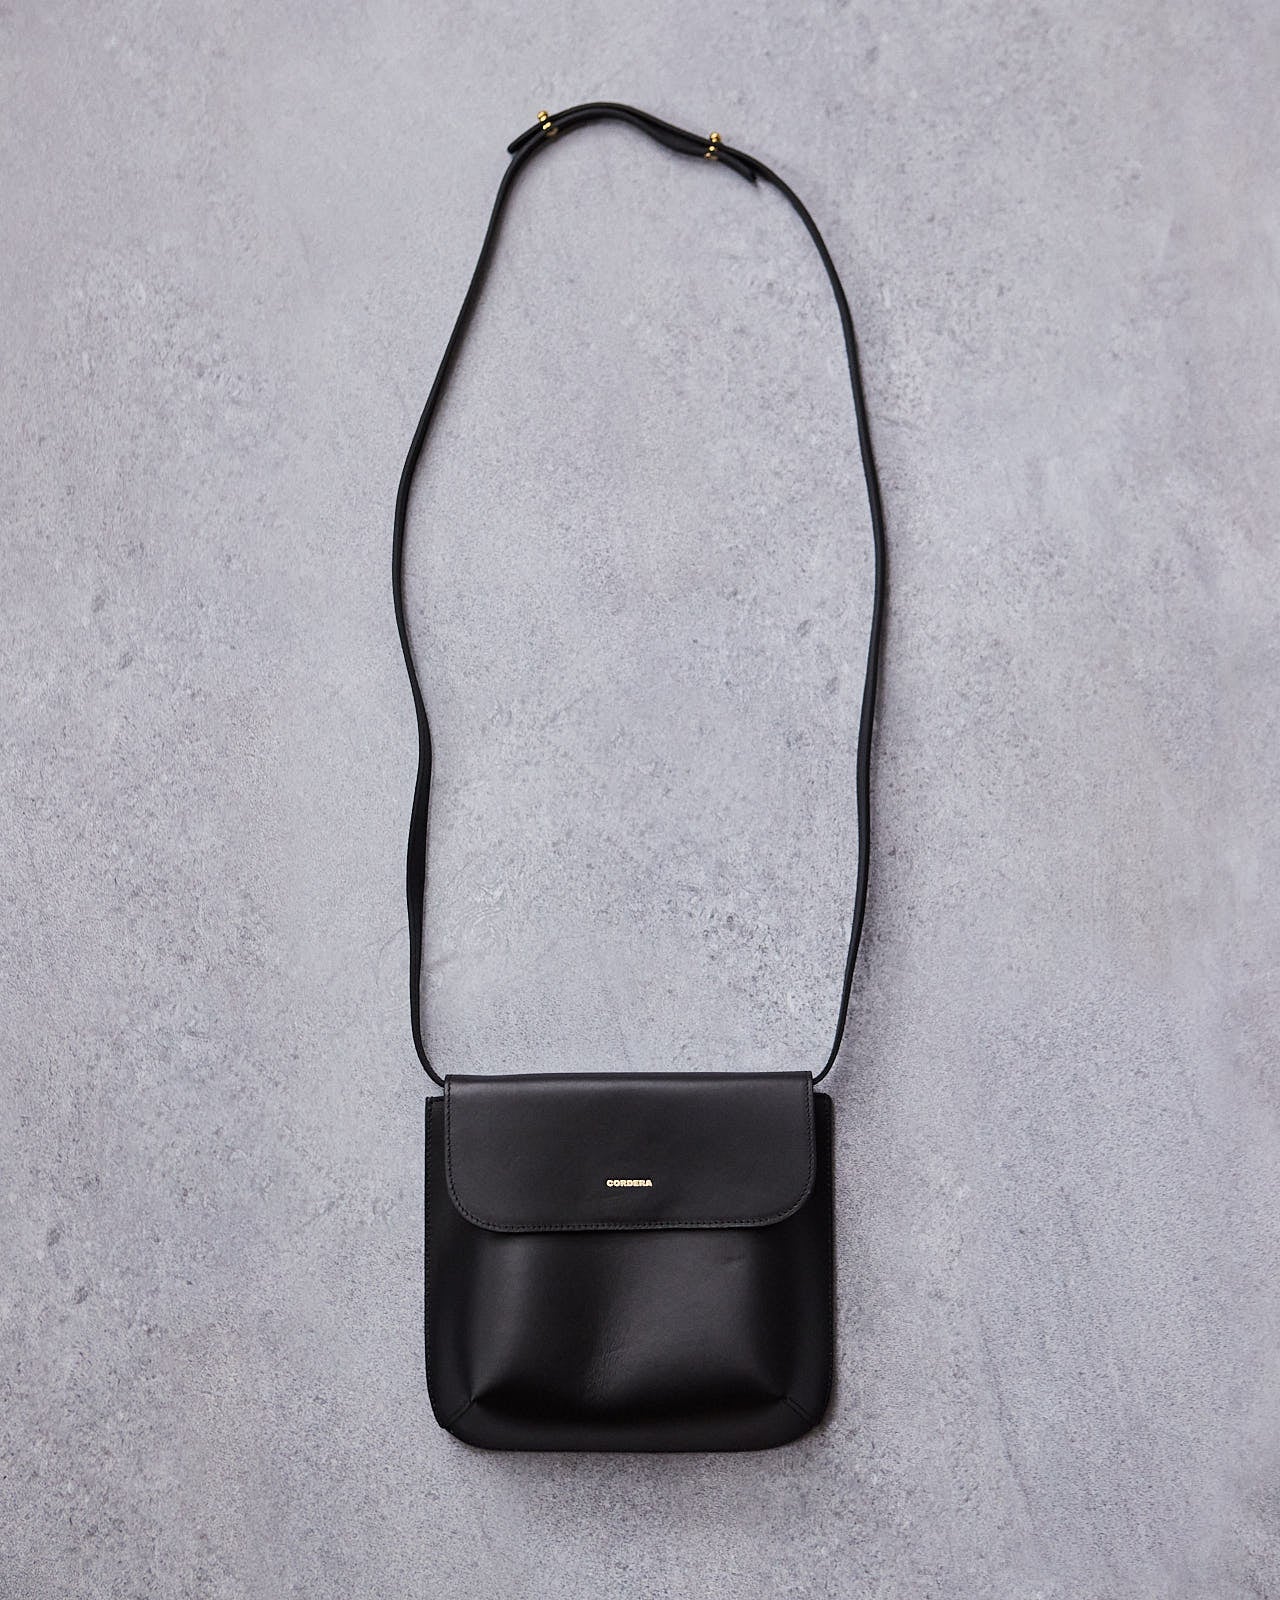 Cordera Leather Flap Bag, Black